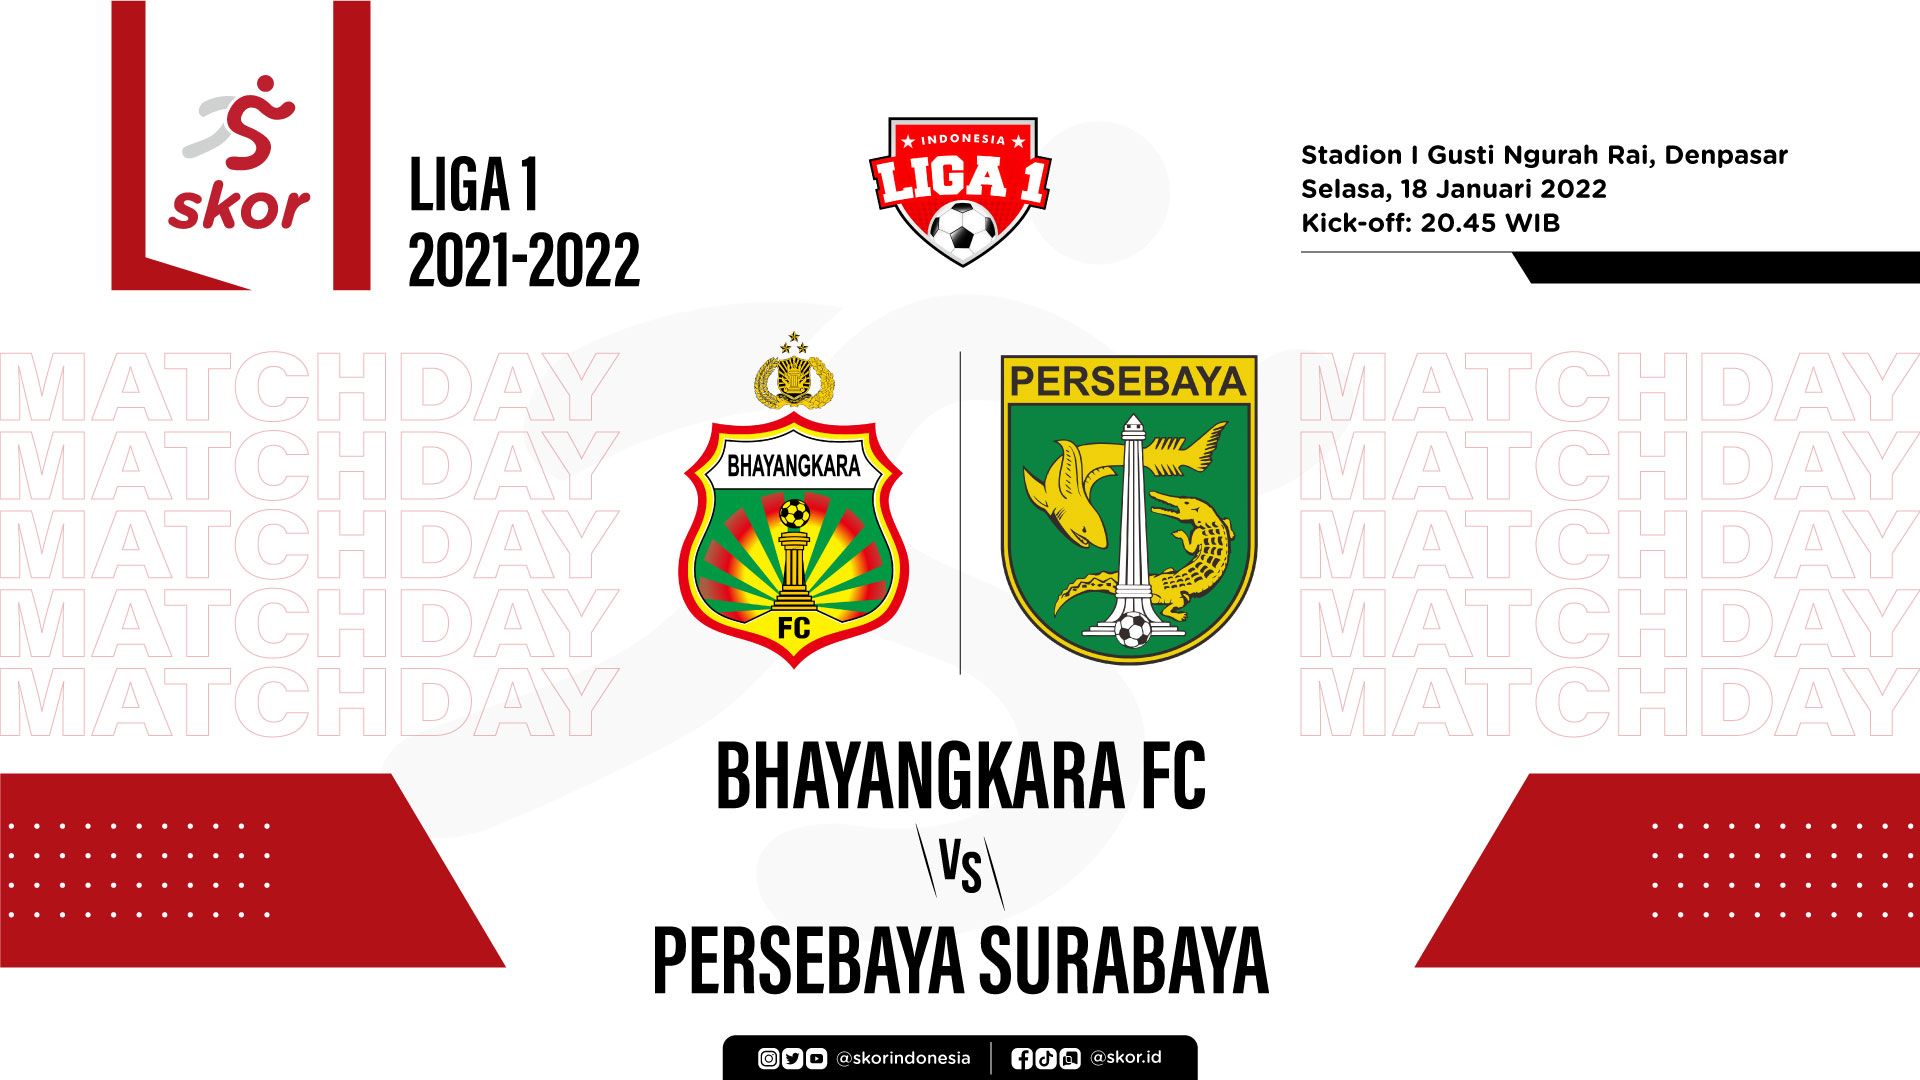 Bhayangkara FC vs Persebaya Surabaya